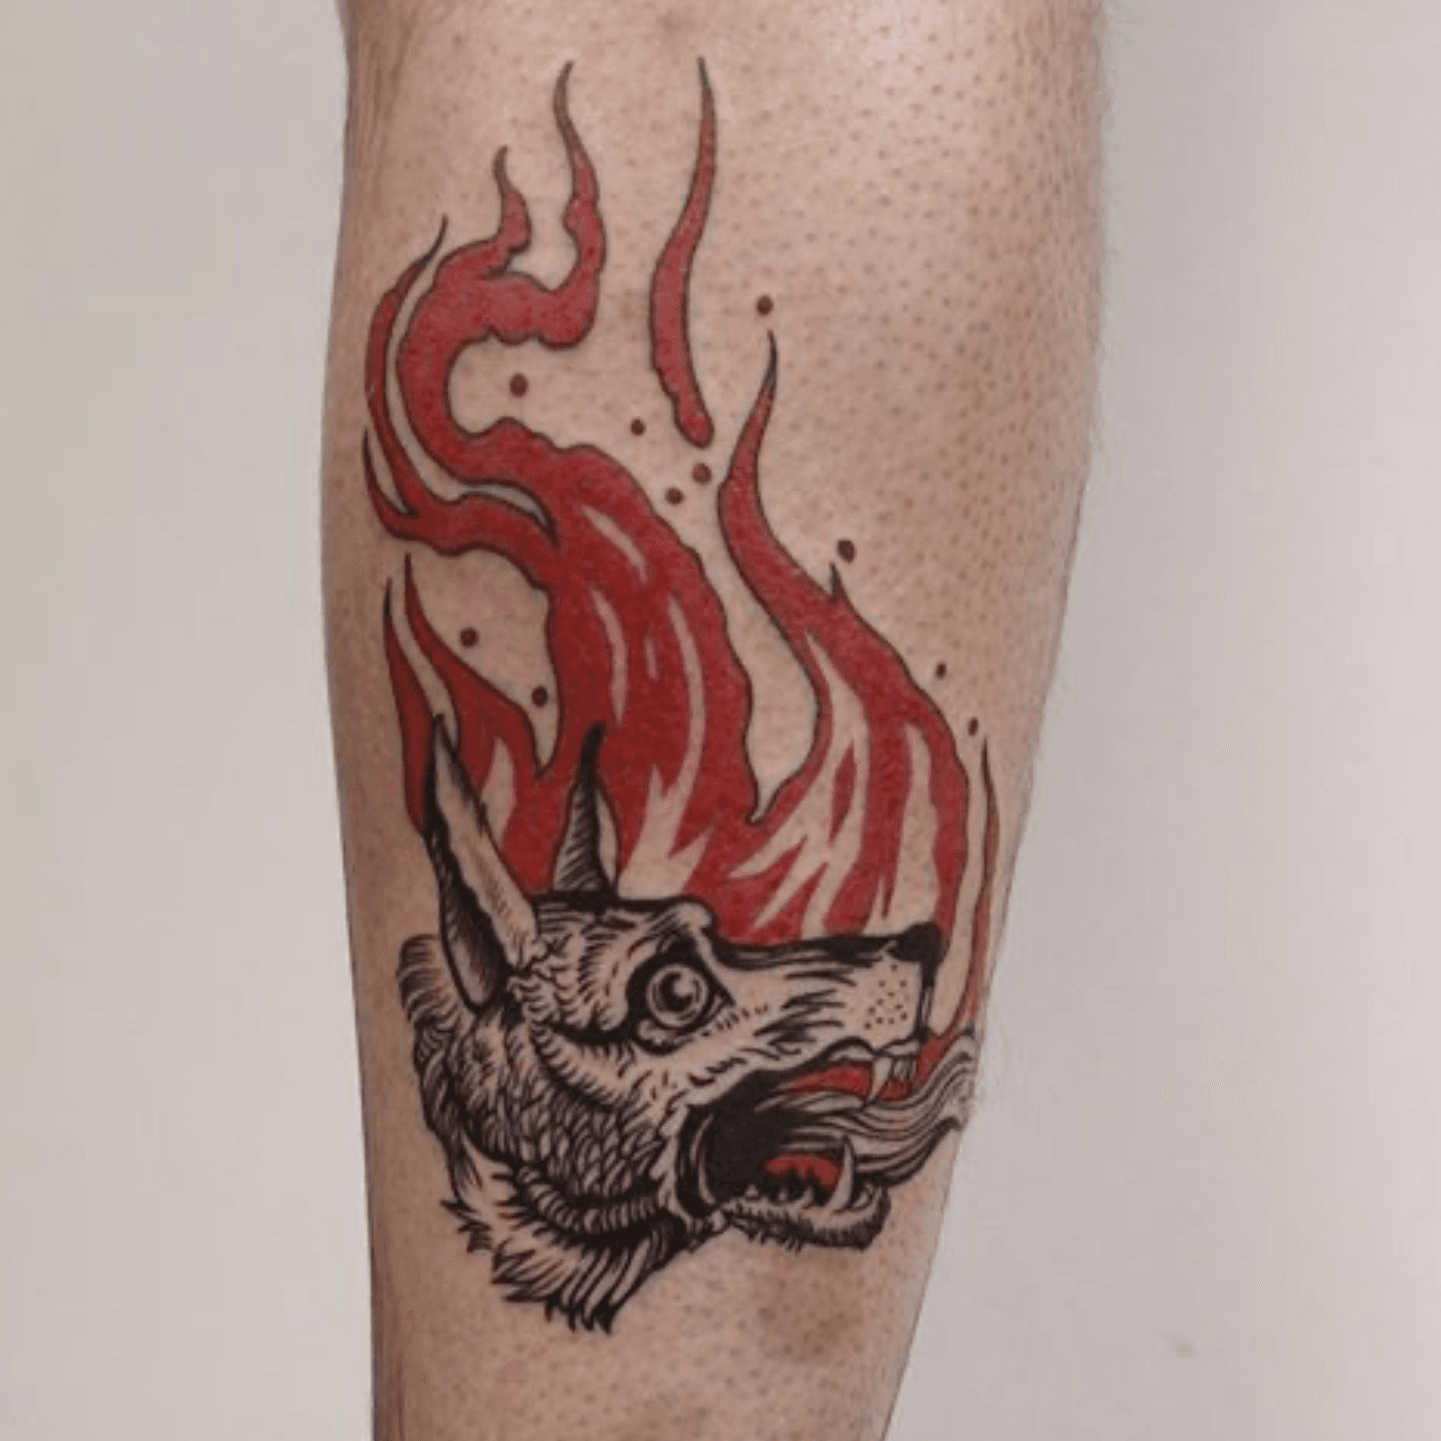 Tattoo uploaded by Dreck 2000 • Wolf tattoo by Dreck 2000 #dreck2000 #fire # wolf #dog #illustrative • Tattoodo